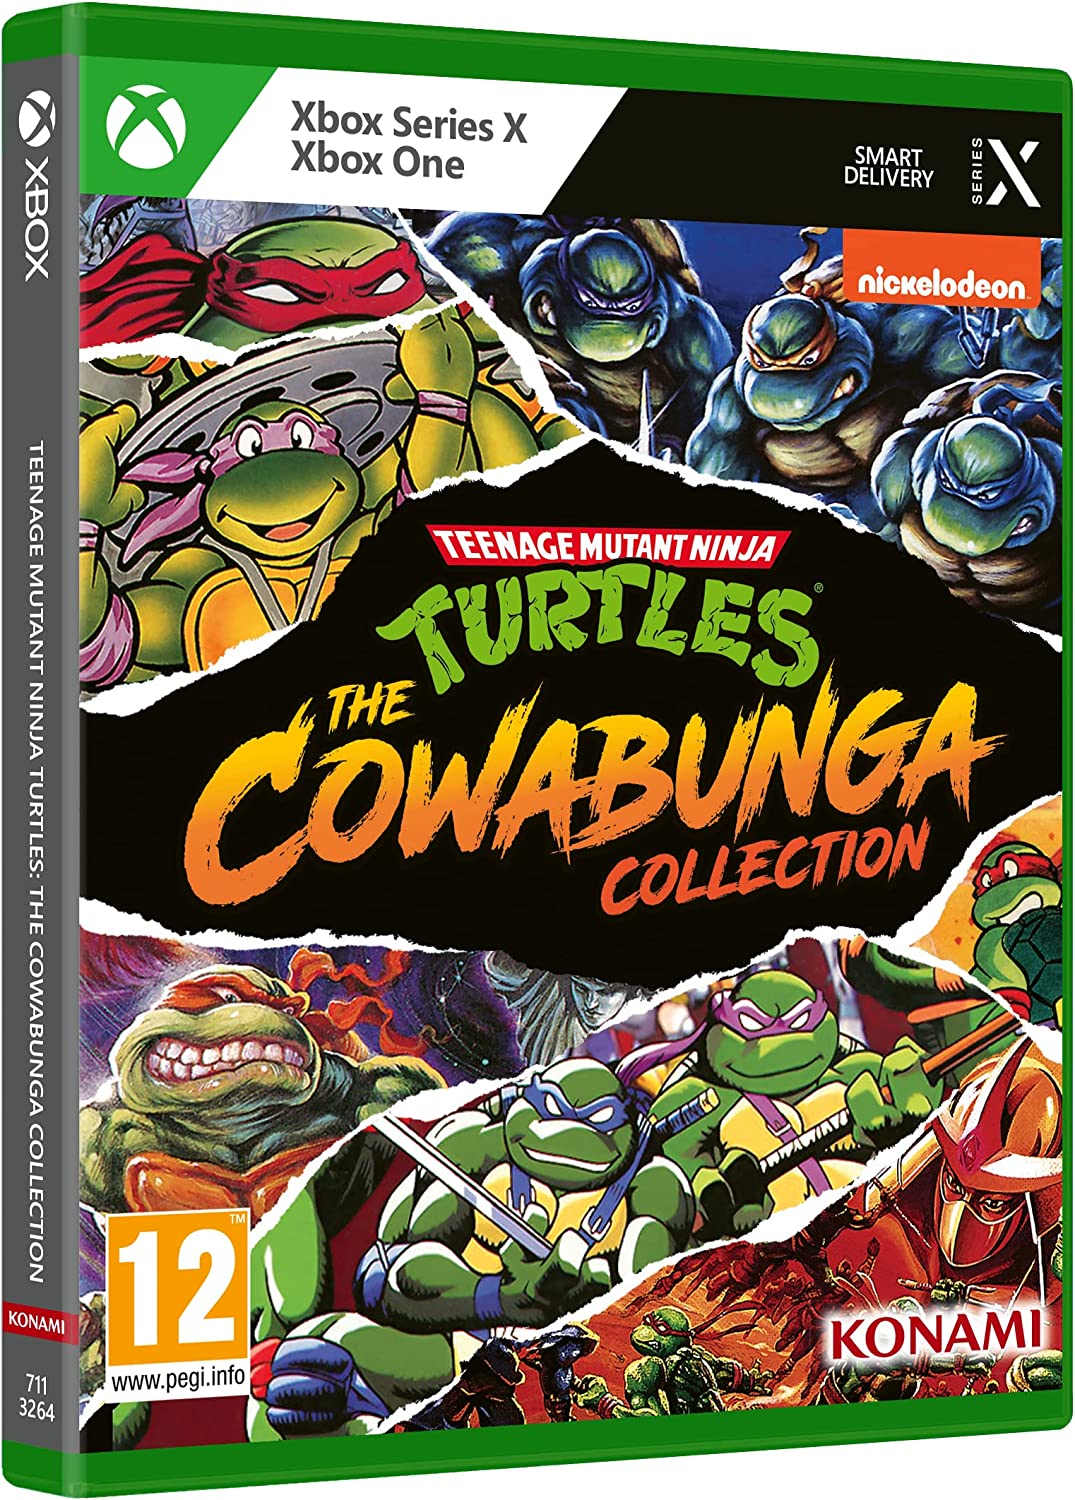 Teenage Mutant CD Collection (Digital Ninja X|S The Turtles: for Cowabunga Xbox Series Download) Key